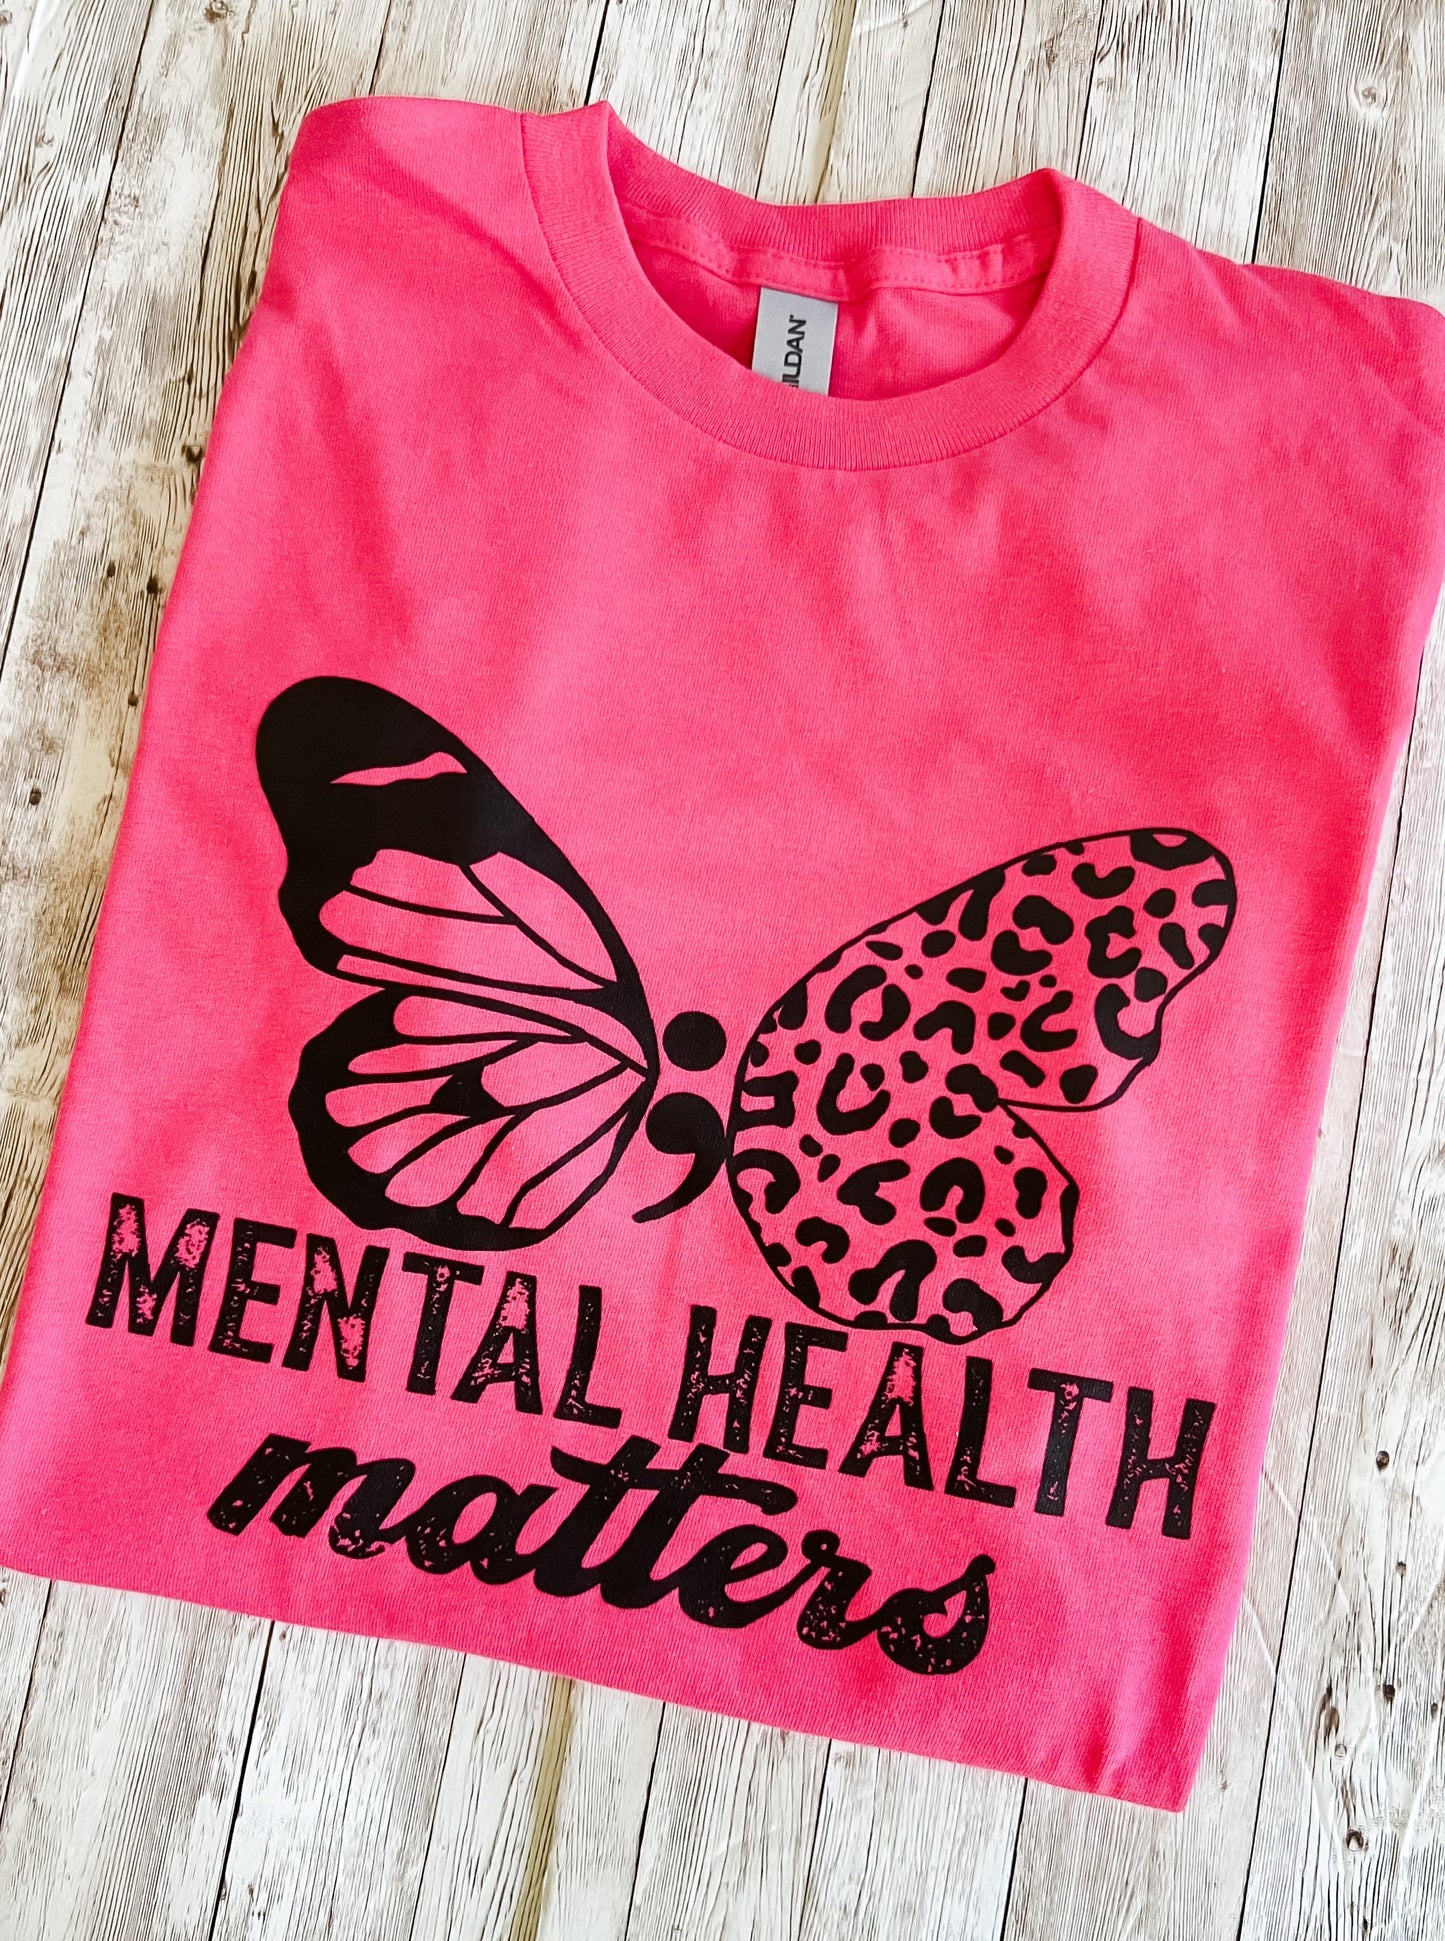 Mental Health Matters Butterfly